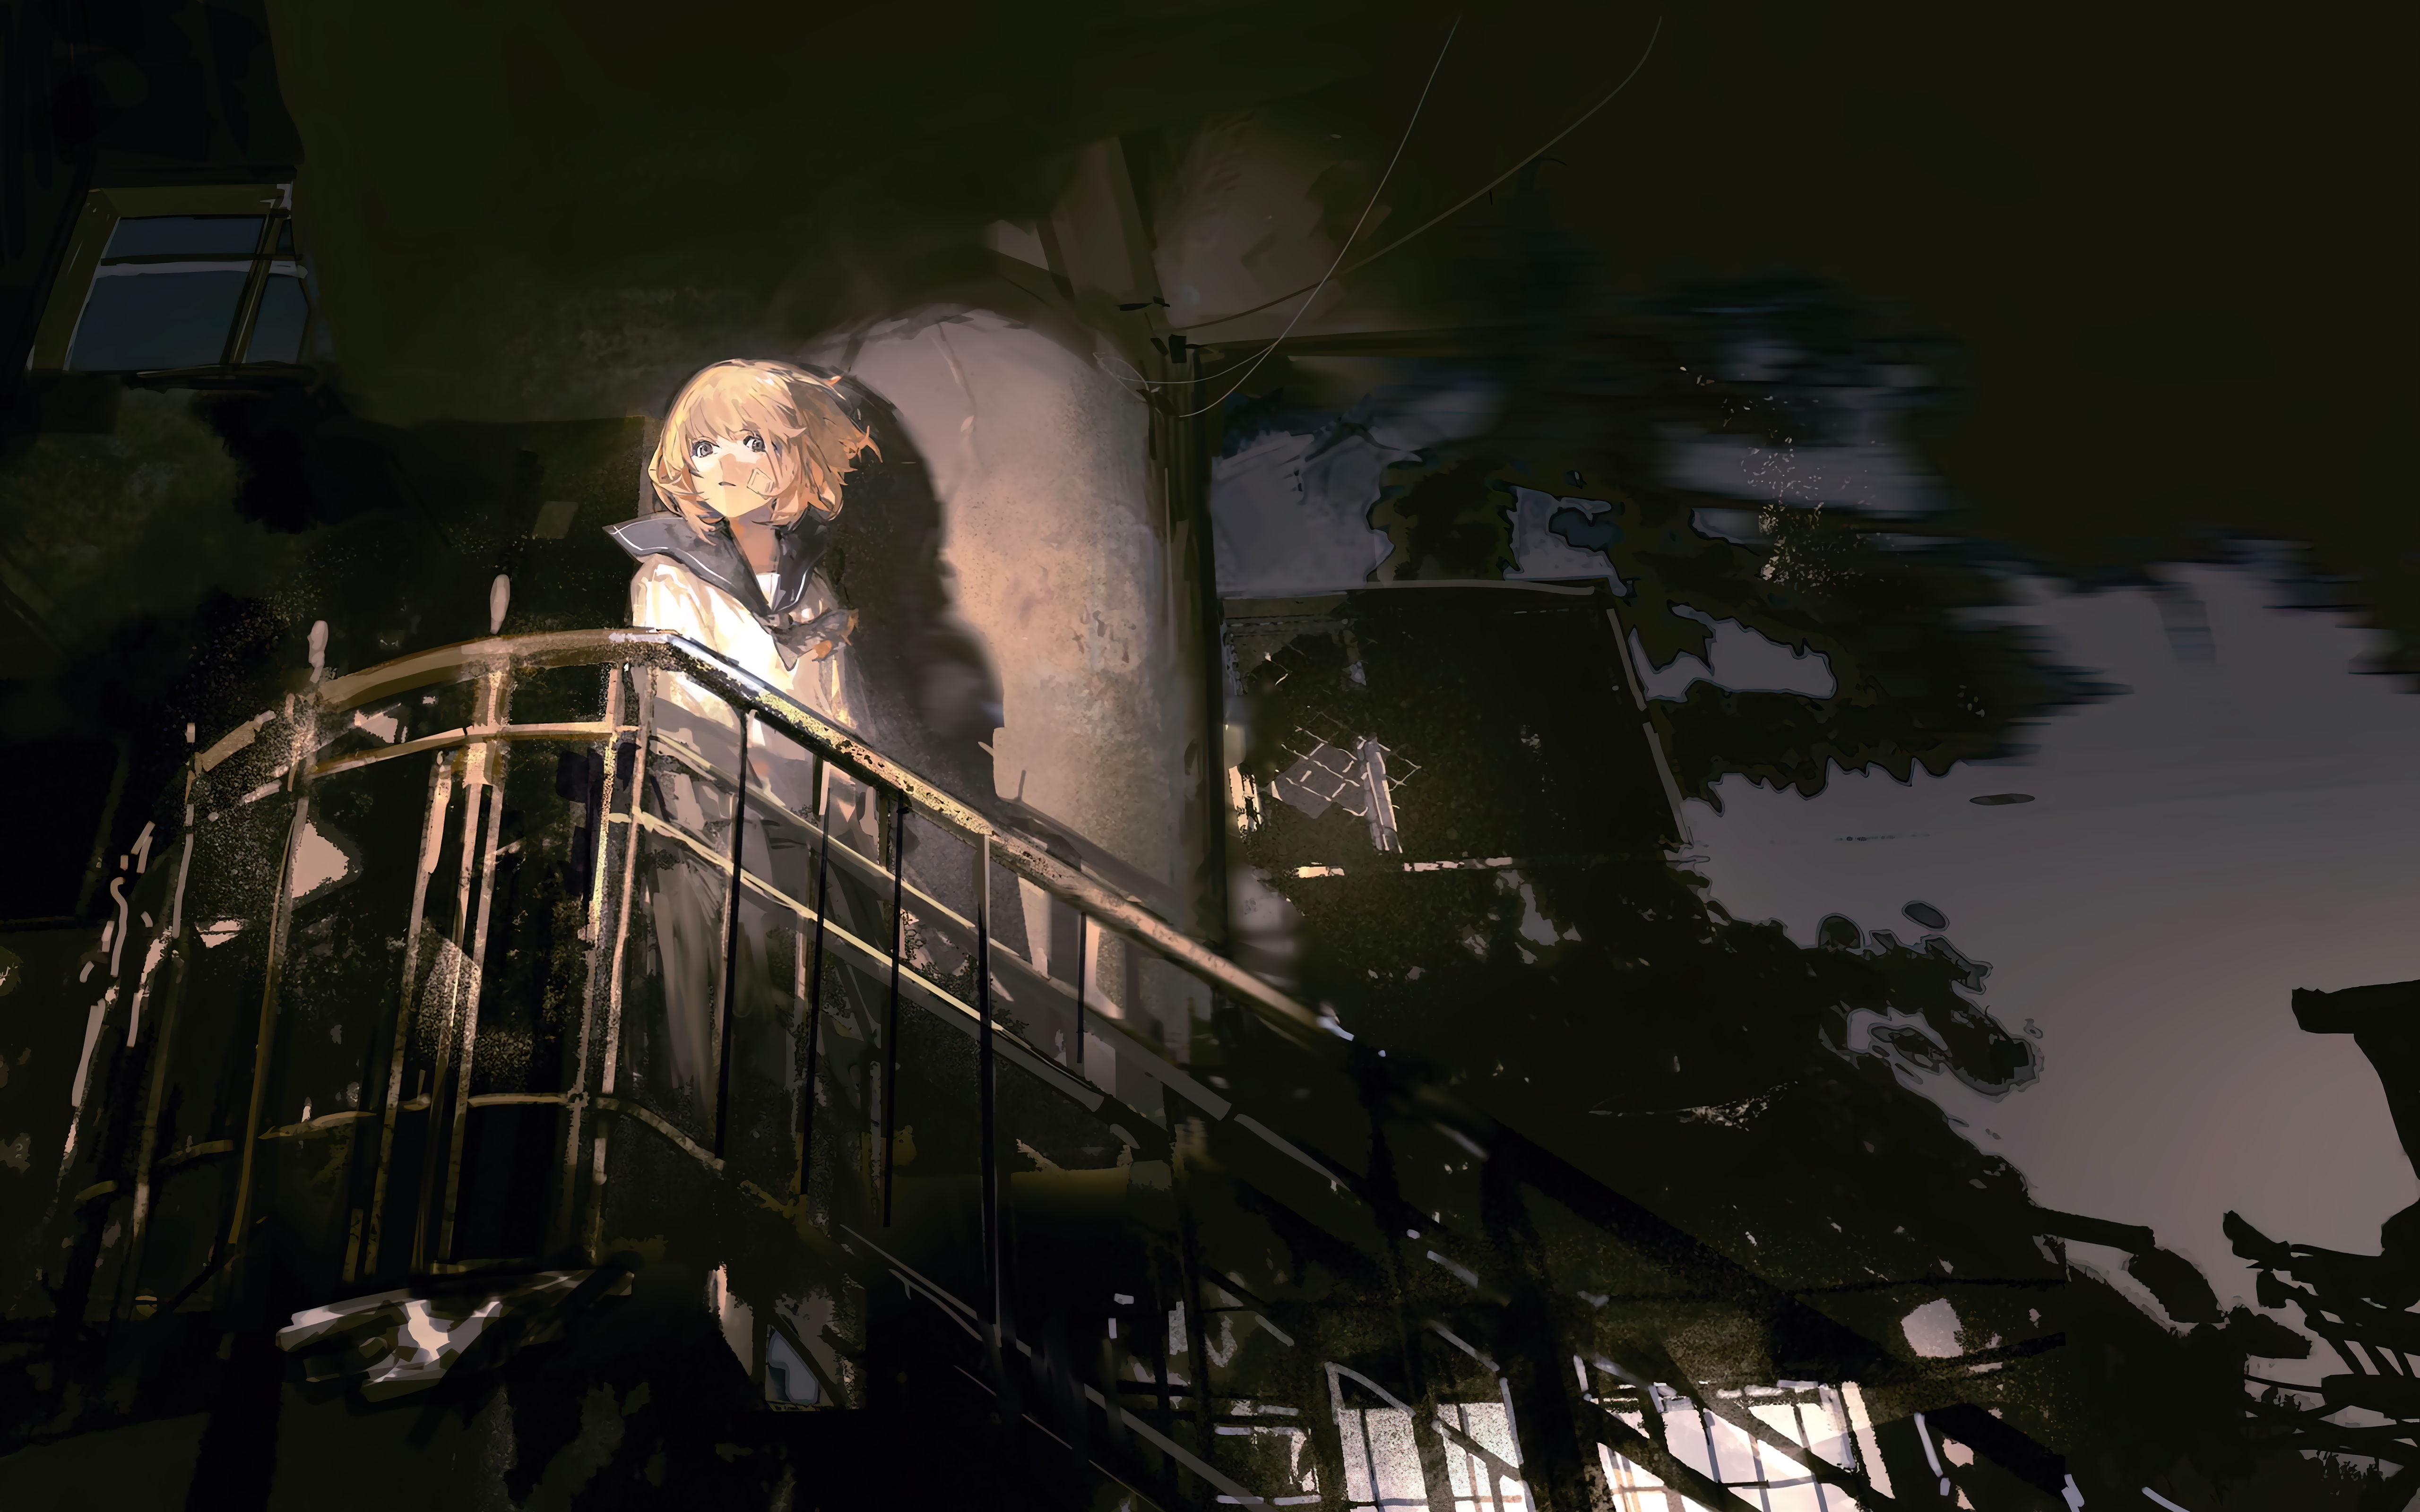 Anime Anime Girls Stairs Sailor Uniform Short Hair Light Effects Window Blonde 5120x3200